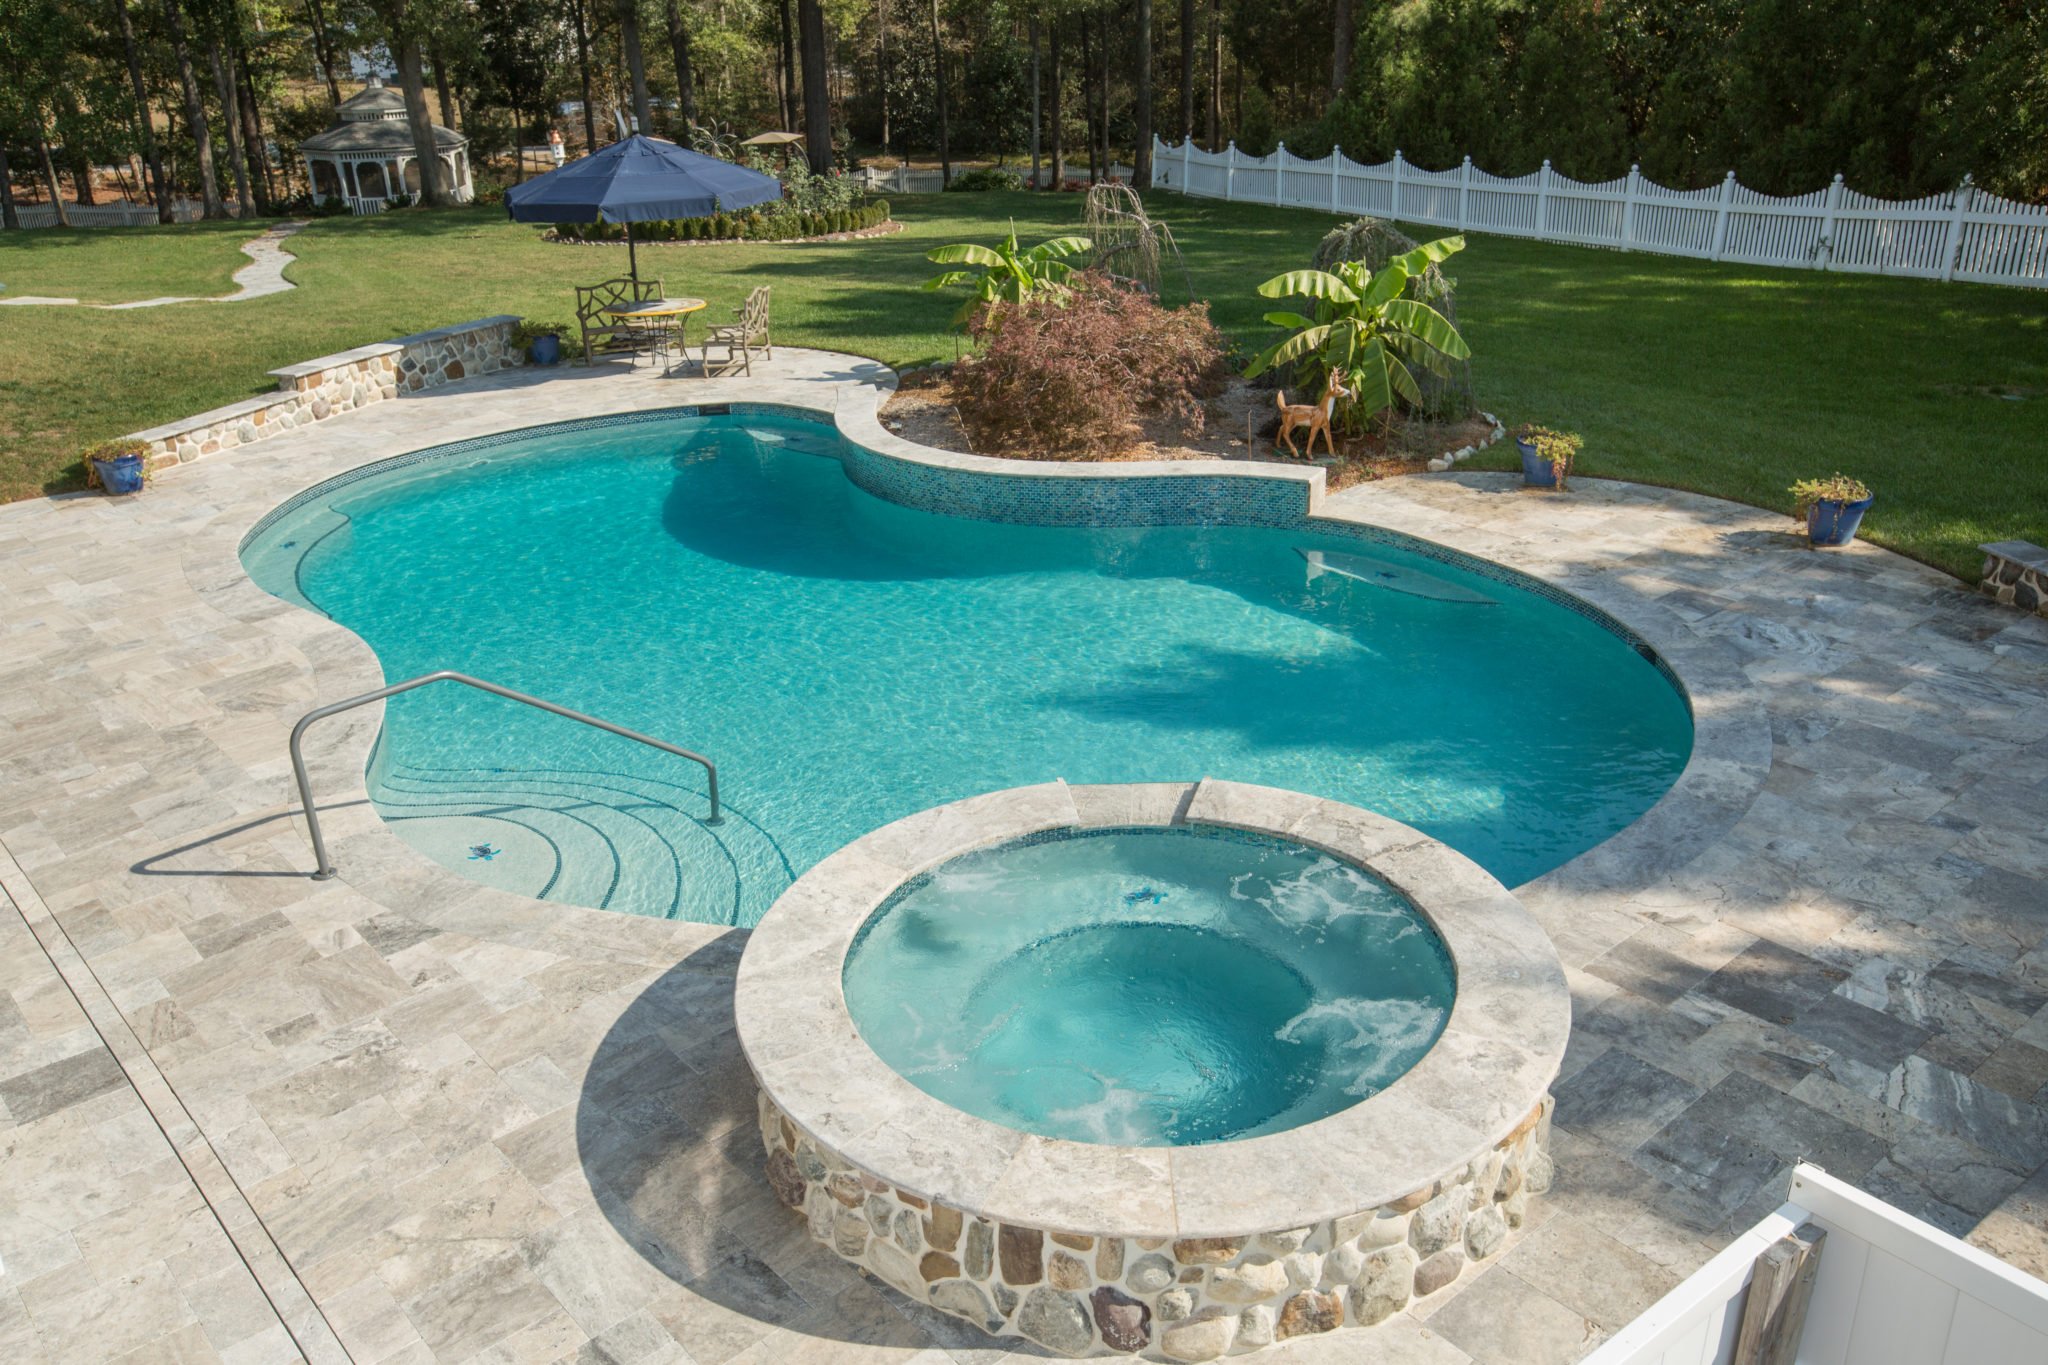 Pool and hot tub in backyard with dark blue umbrella